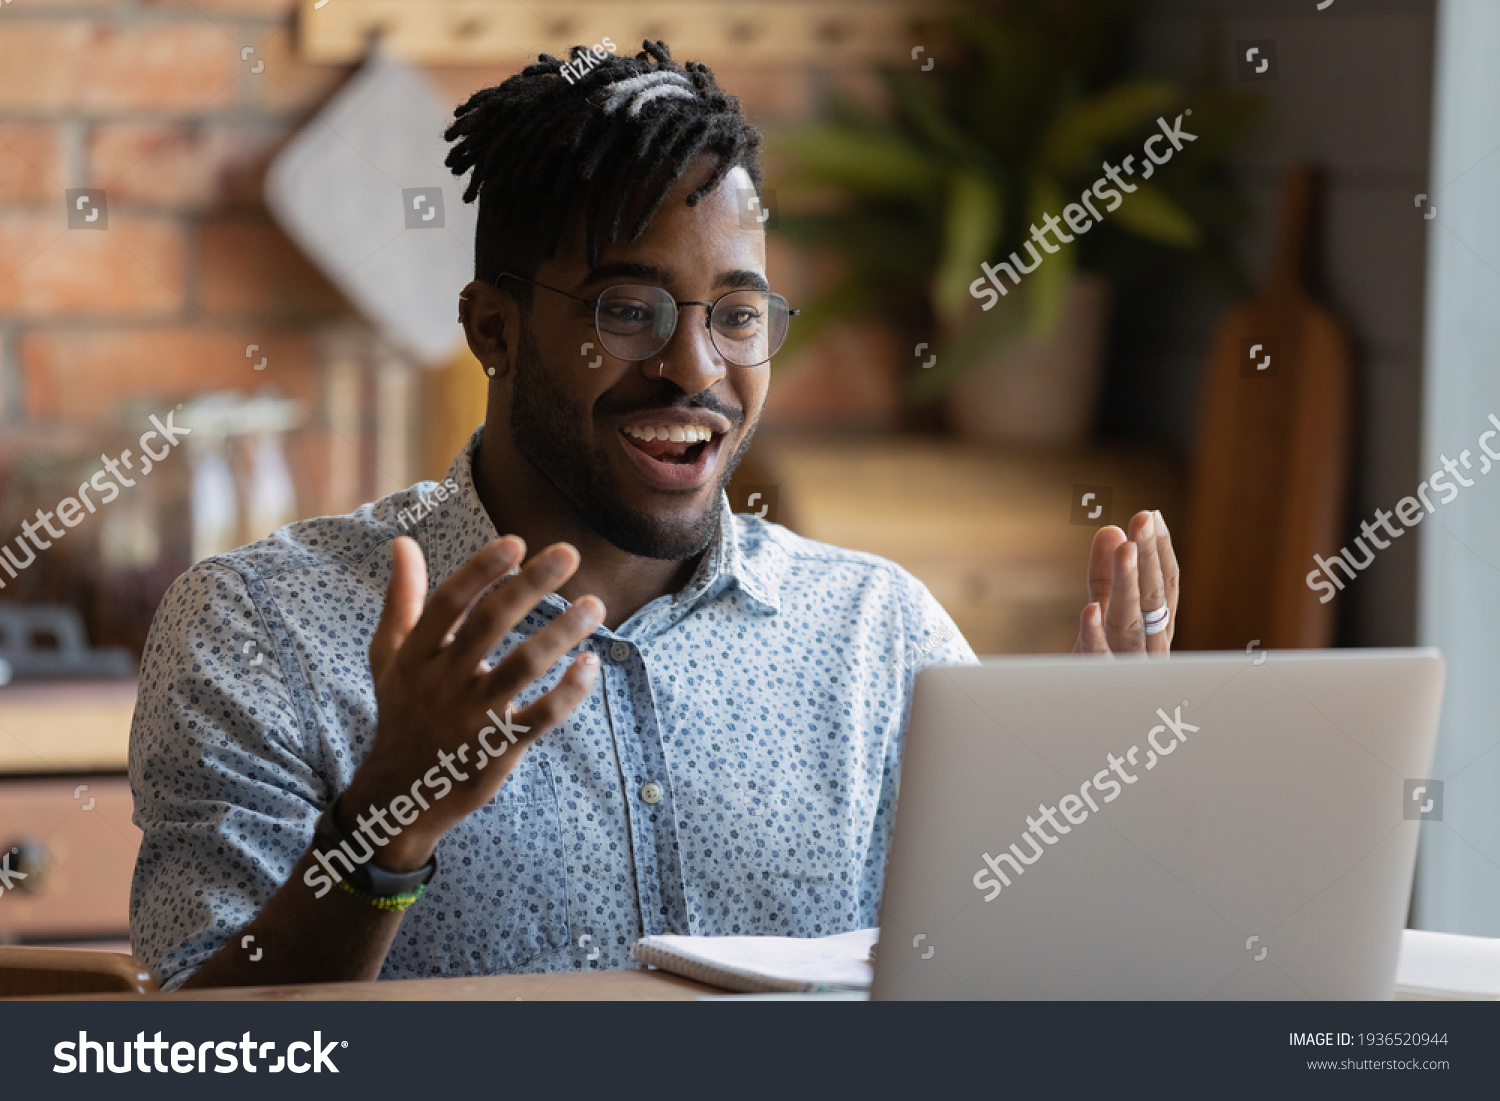 Happy young afro american man software developer run program code on pc enjoy reaching successful result. Overjoyed black guy look on laptop screen splash hands having winning hand at online blackjack #1936520944